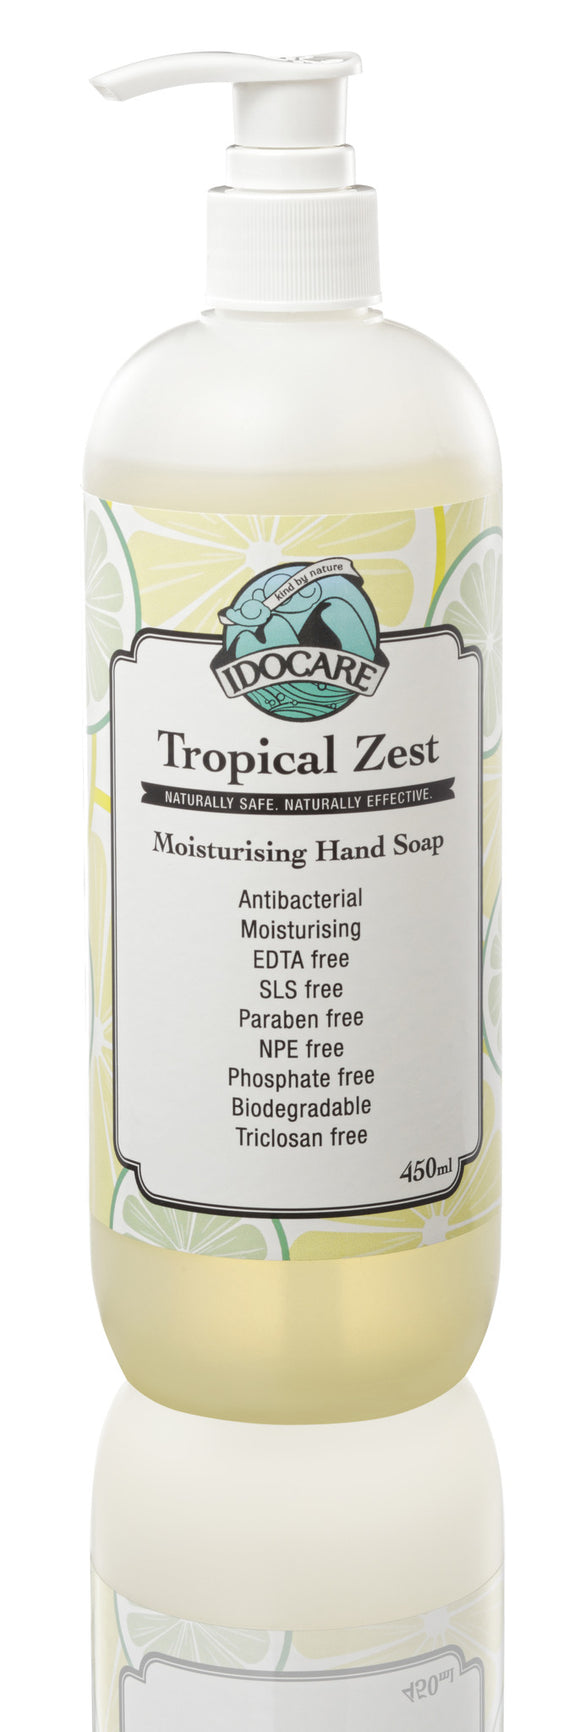 Idocare Tropical Zest Moisturising Hand Soap (450ml)